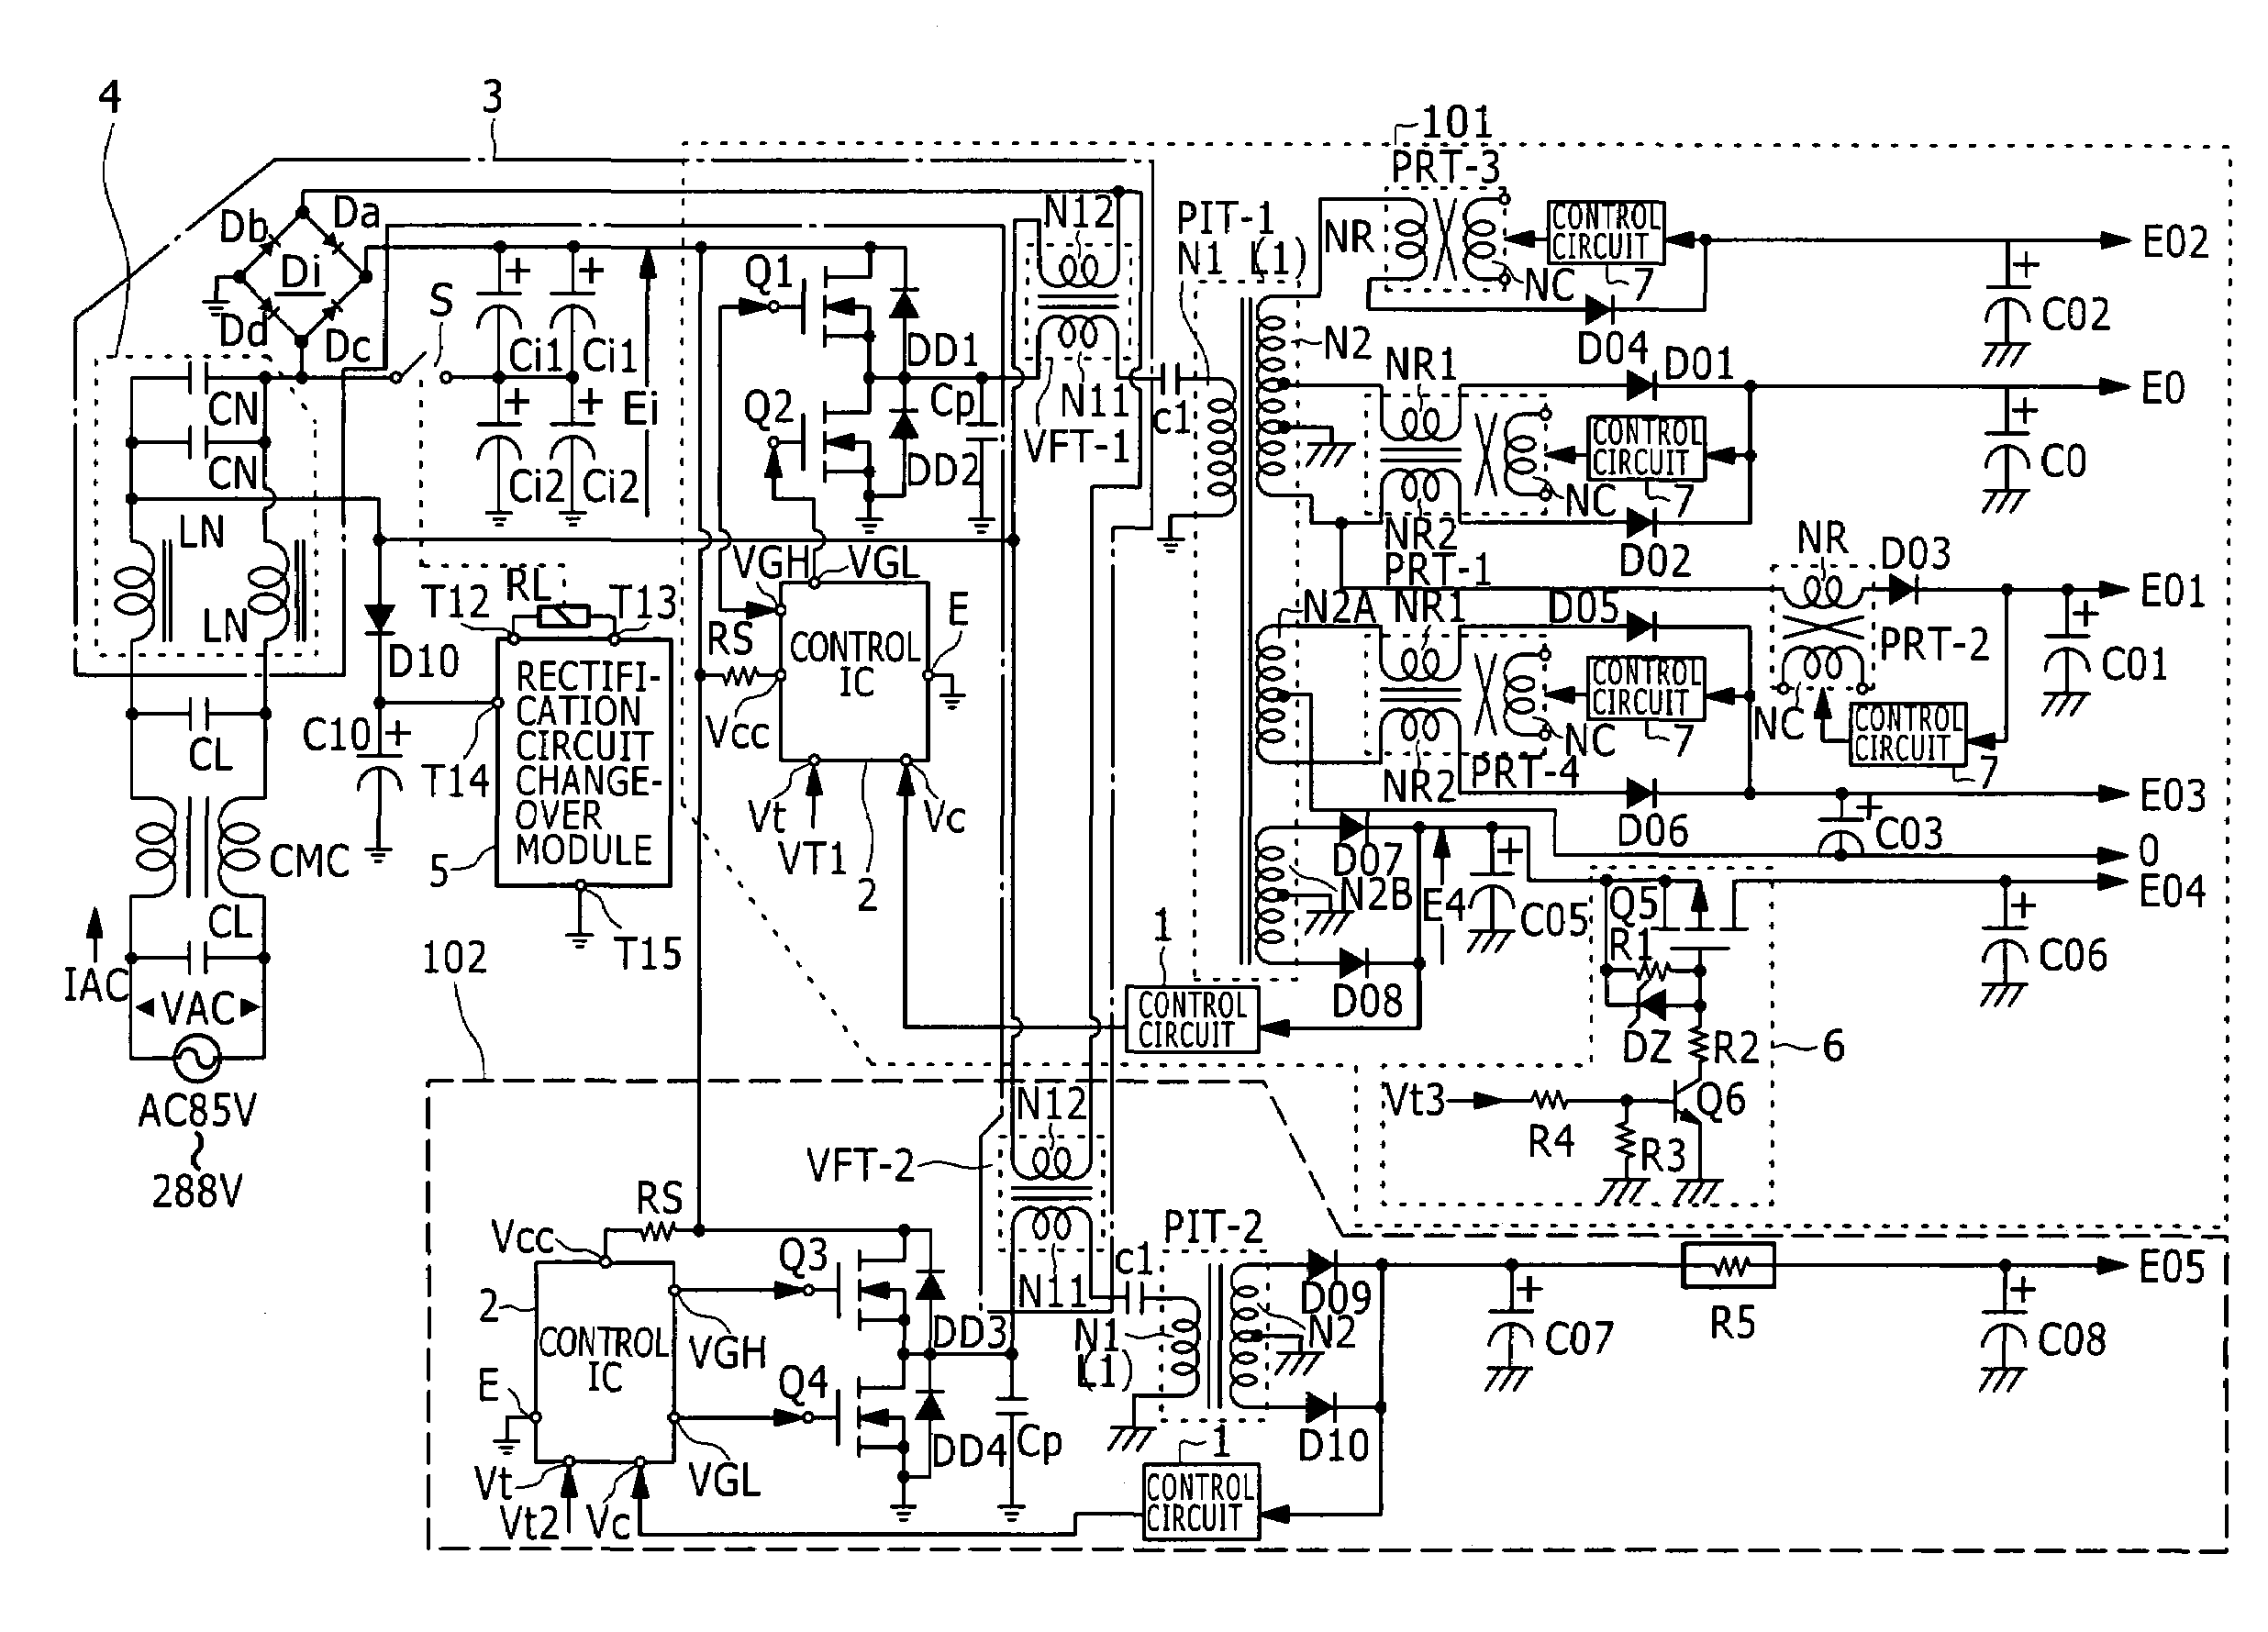 Switching power supply circuit